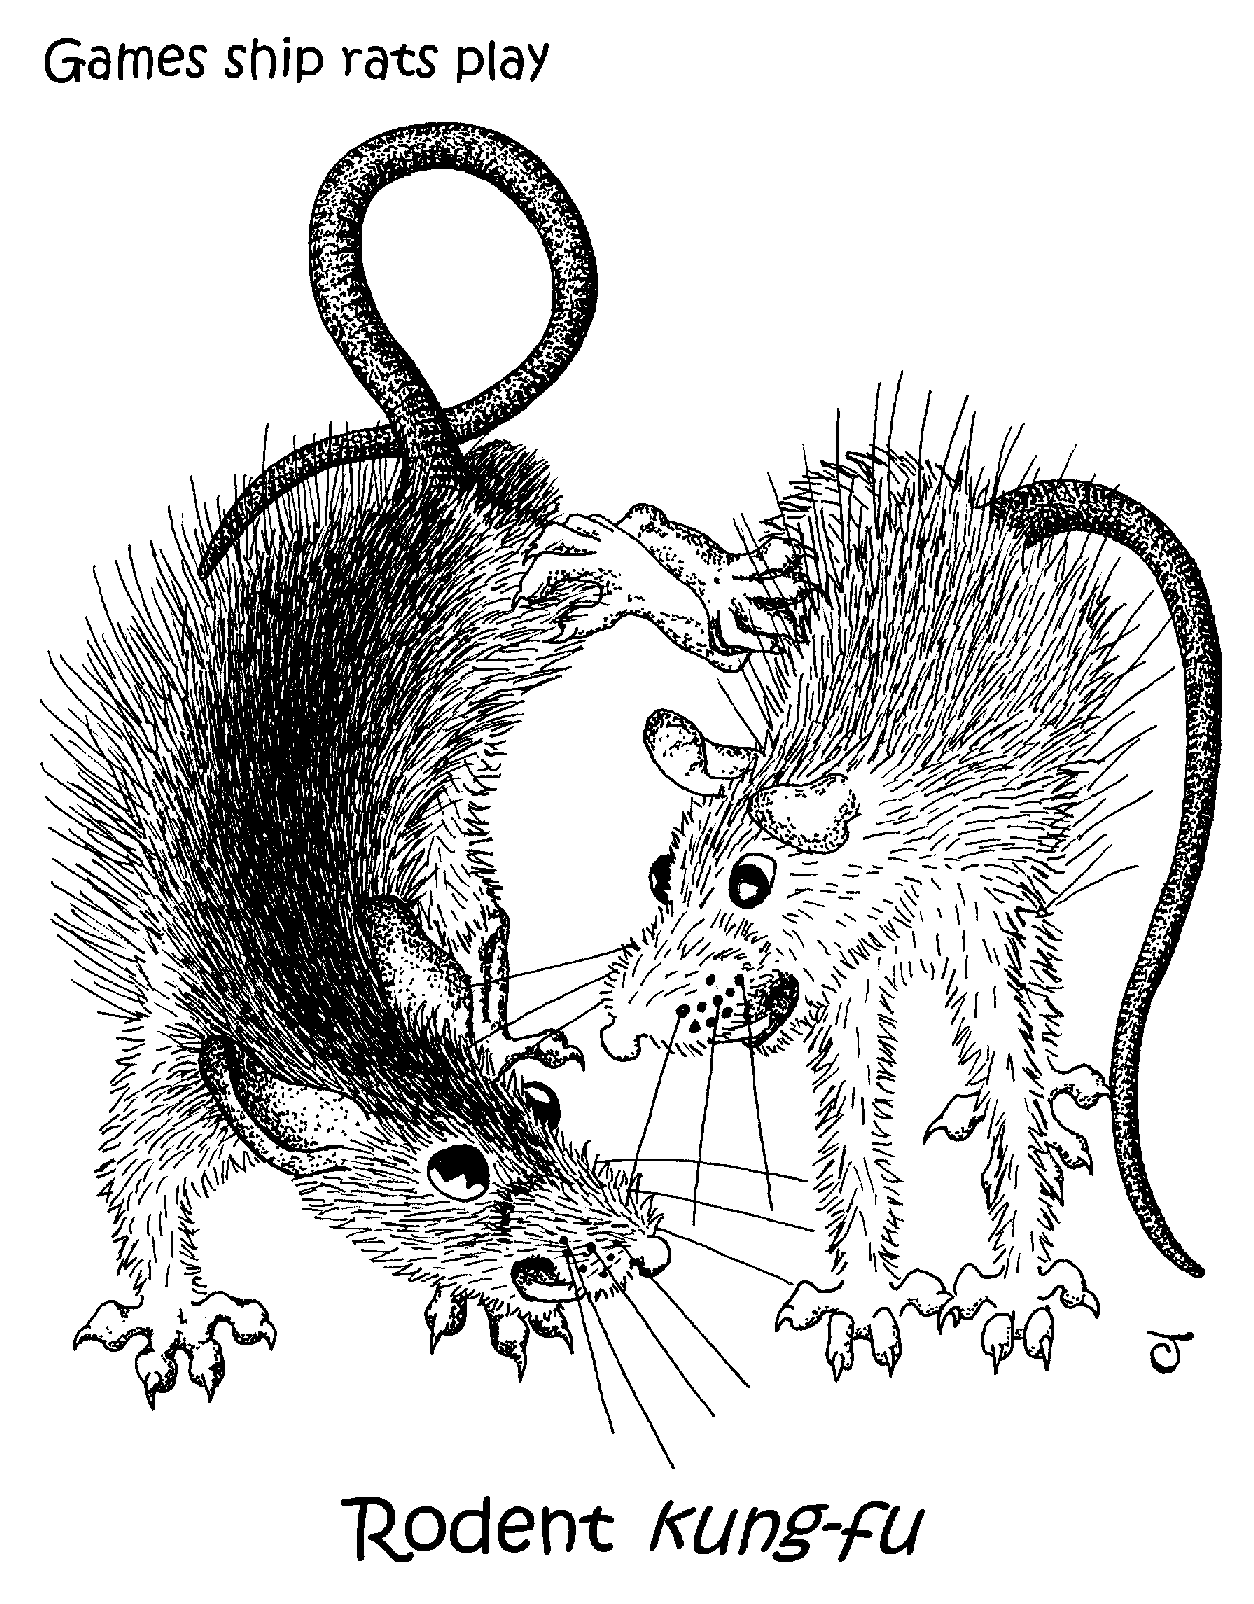 Caricature of two buck ship rats kick-boxing